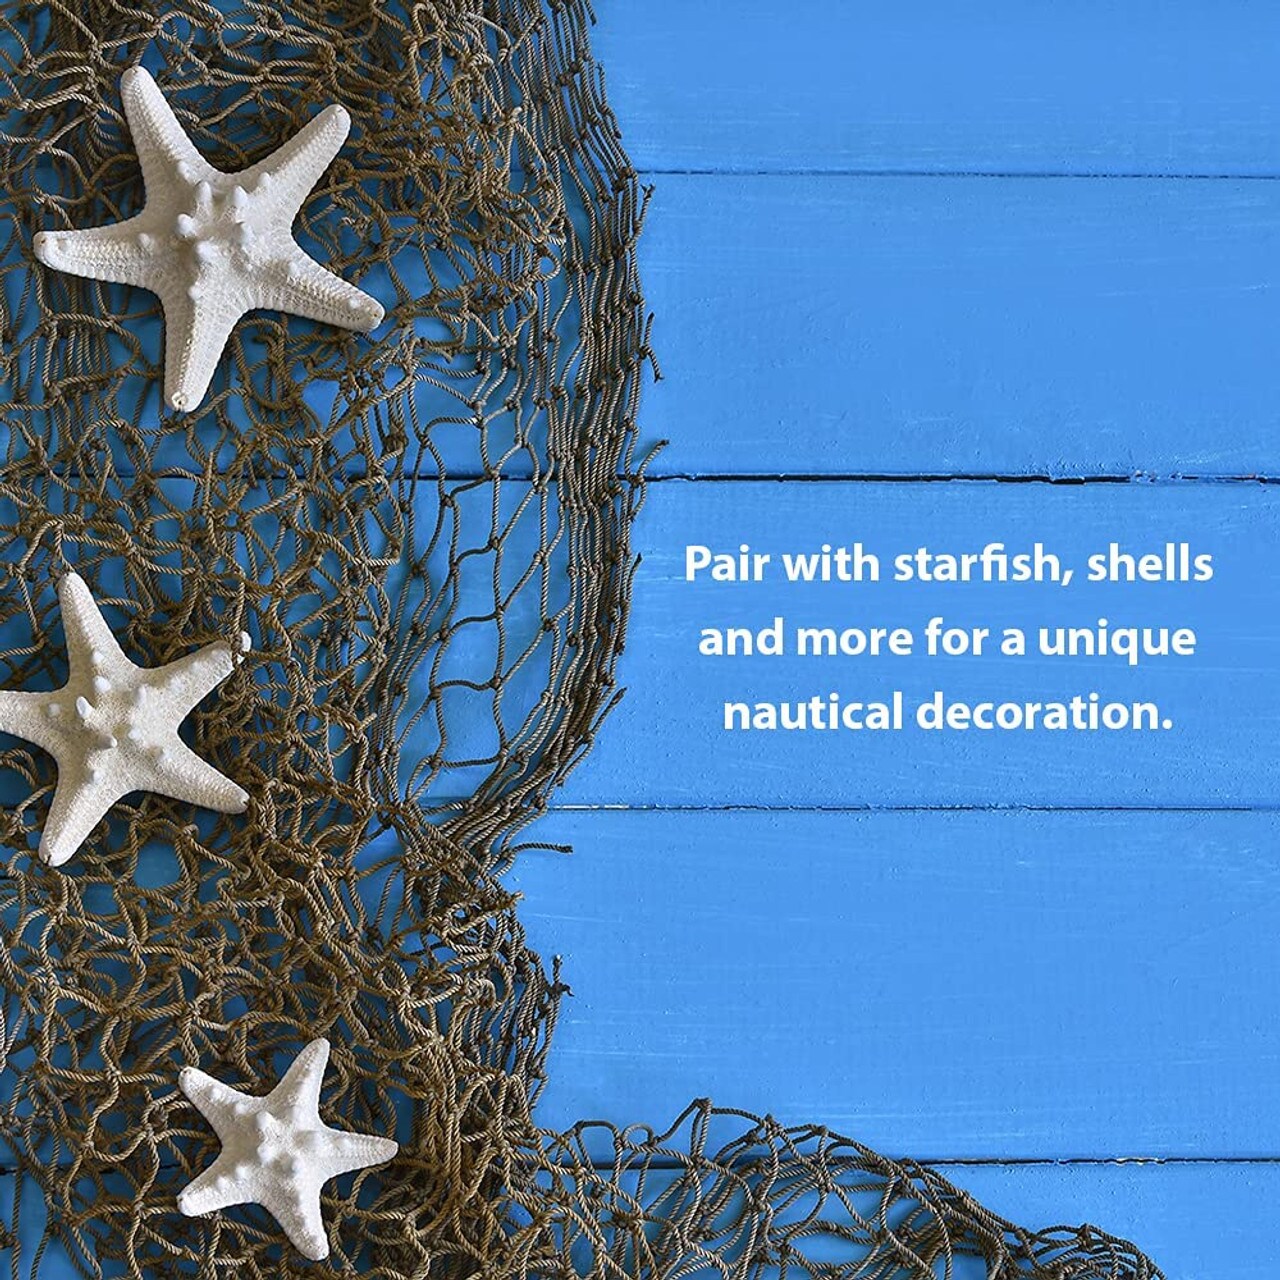 Fishing Net with Starfish, Maritime Nautical Decoration Over White